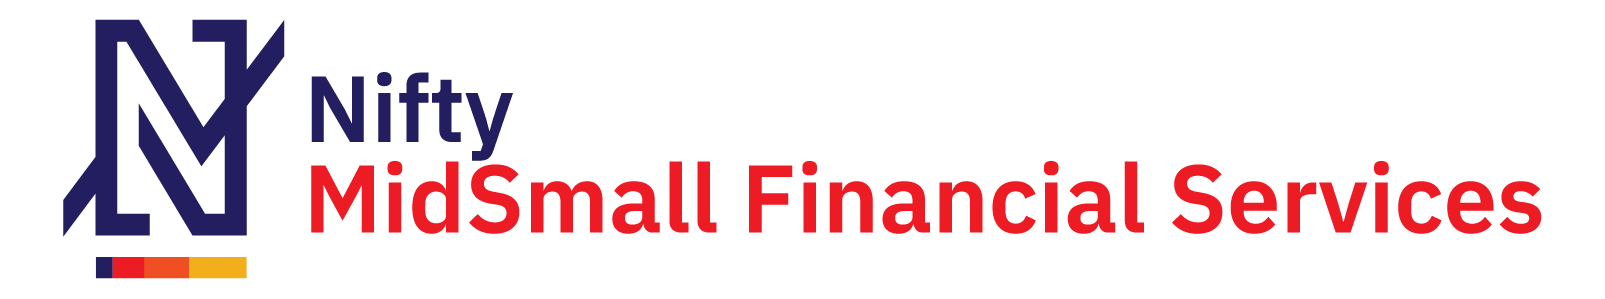 Nifty MidSmall Financial Services logo